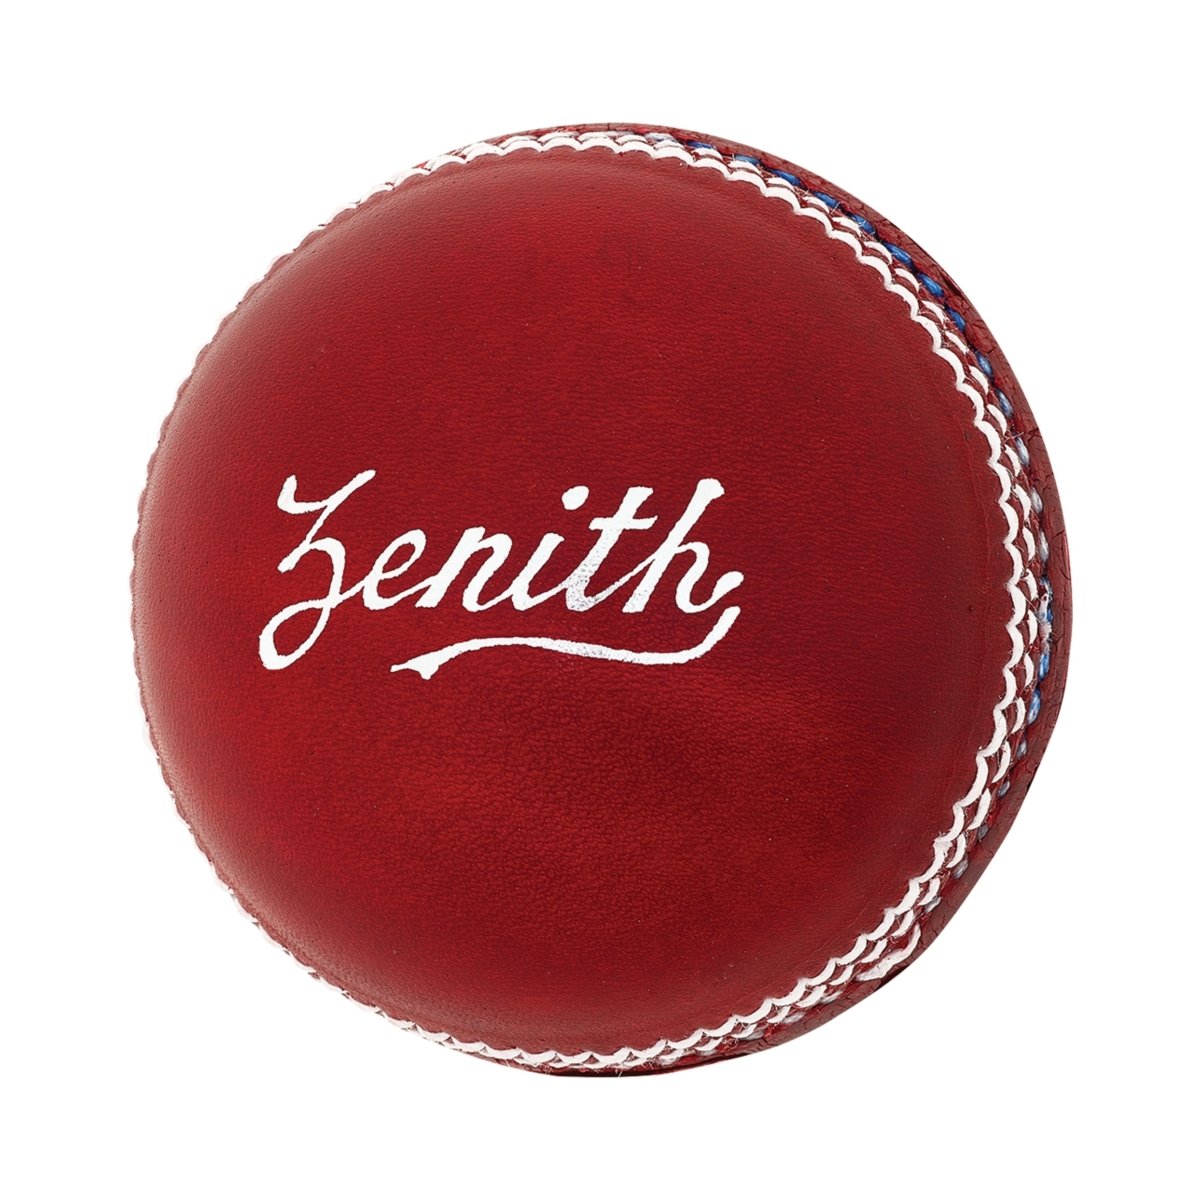 Kookaburra Zenith Cricket Ball Pack of 12 - Acrux Sports